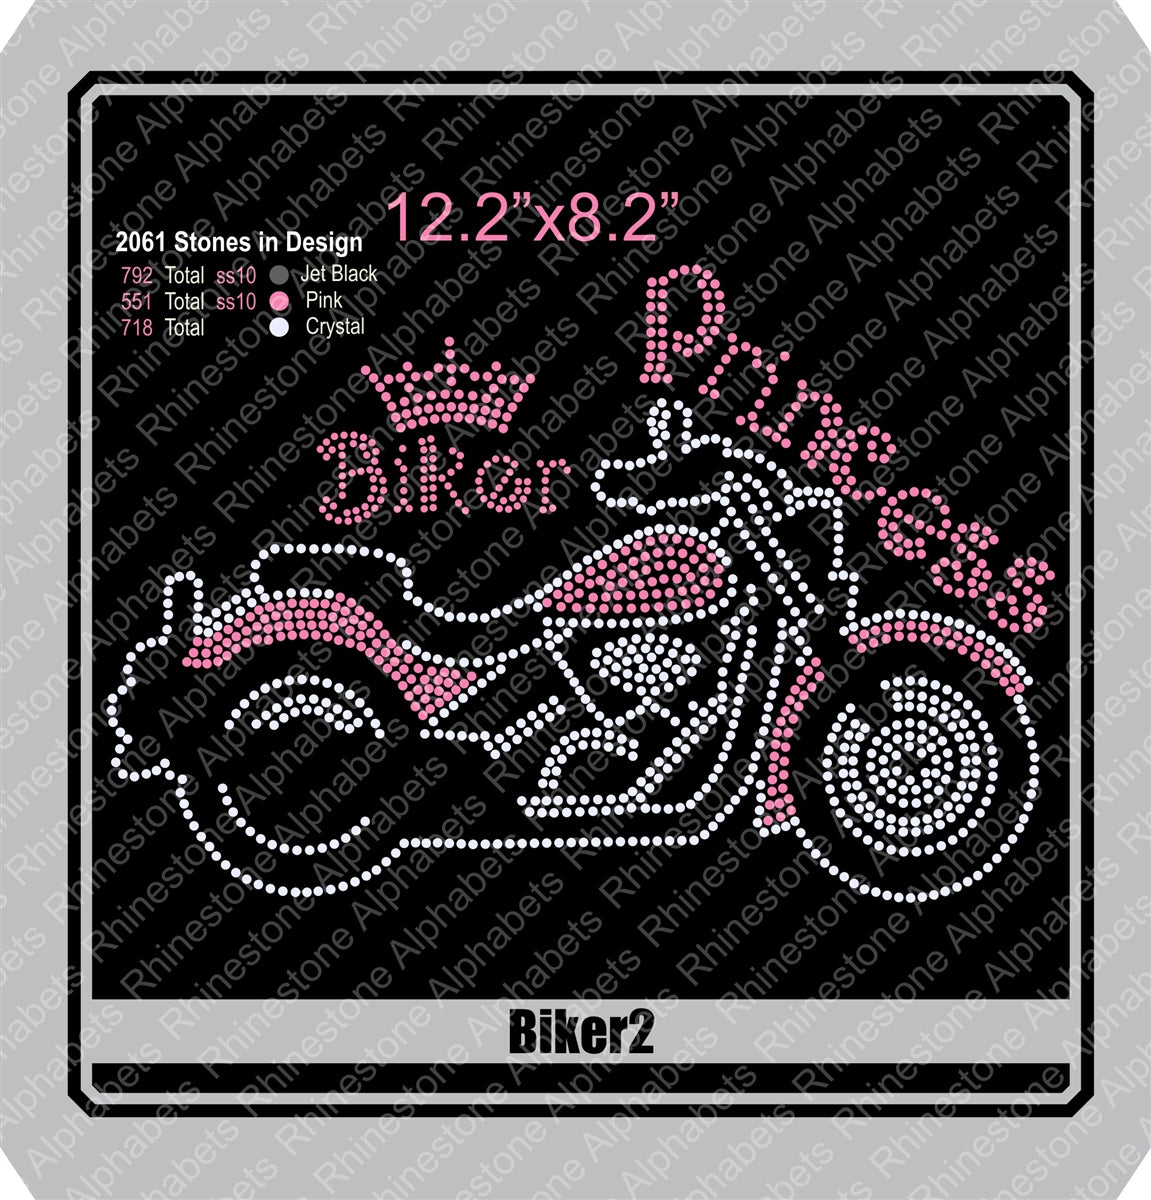 Bikers1234 DSG File Only for HotFix ,TTF Rhinestone Fonts & Rhinestone Designs